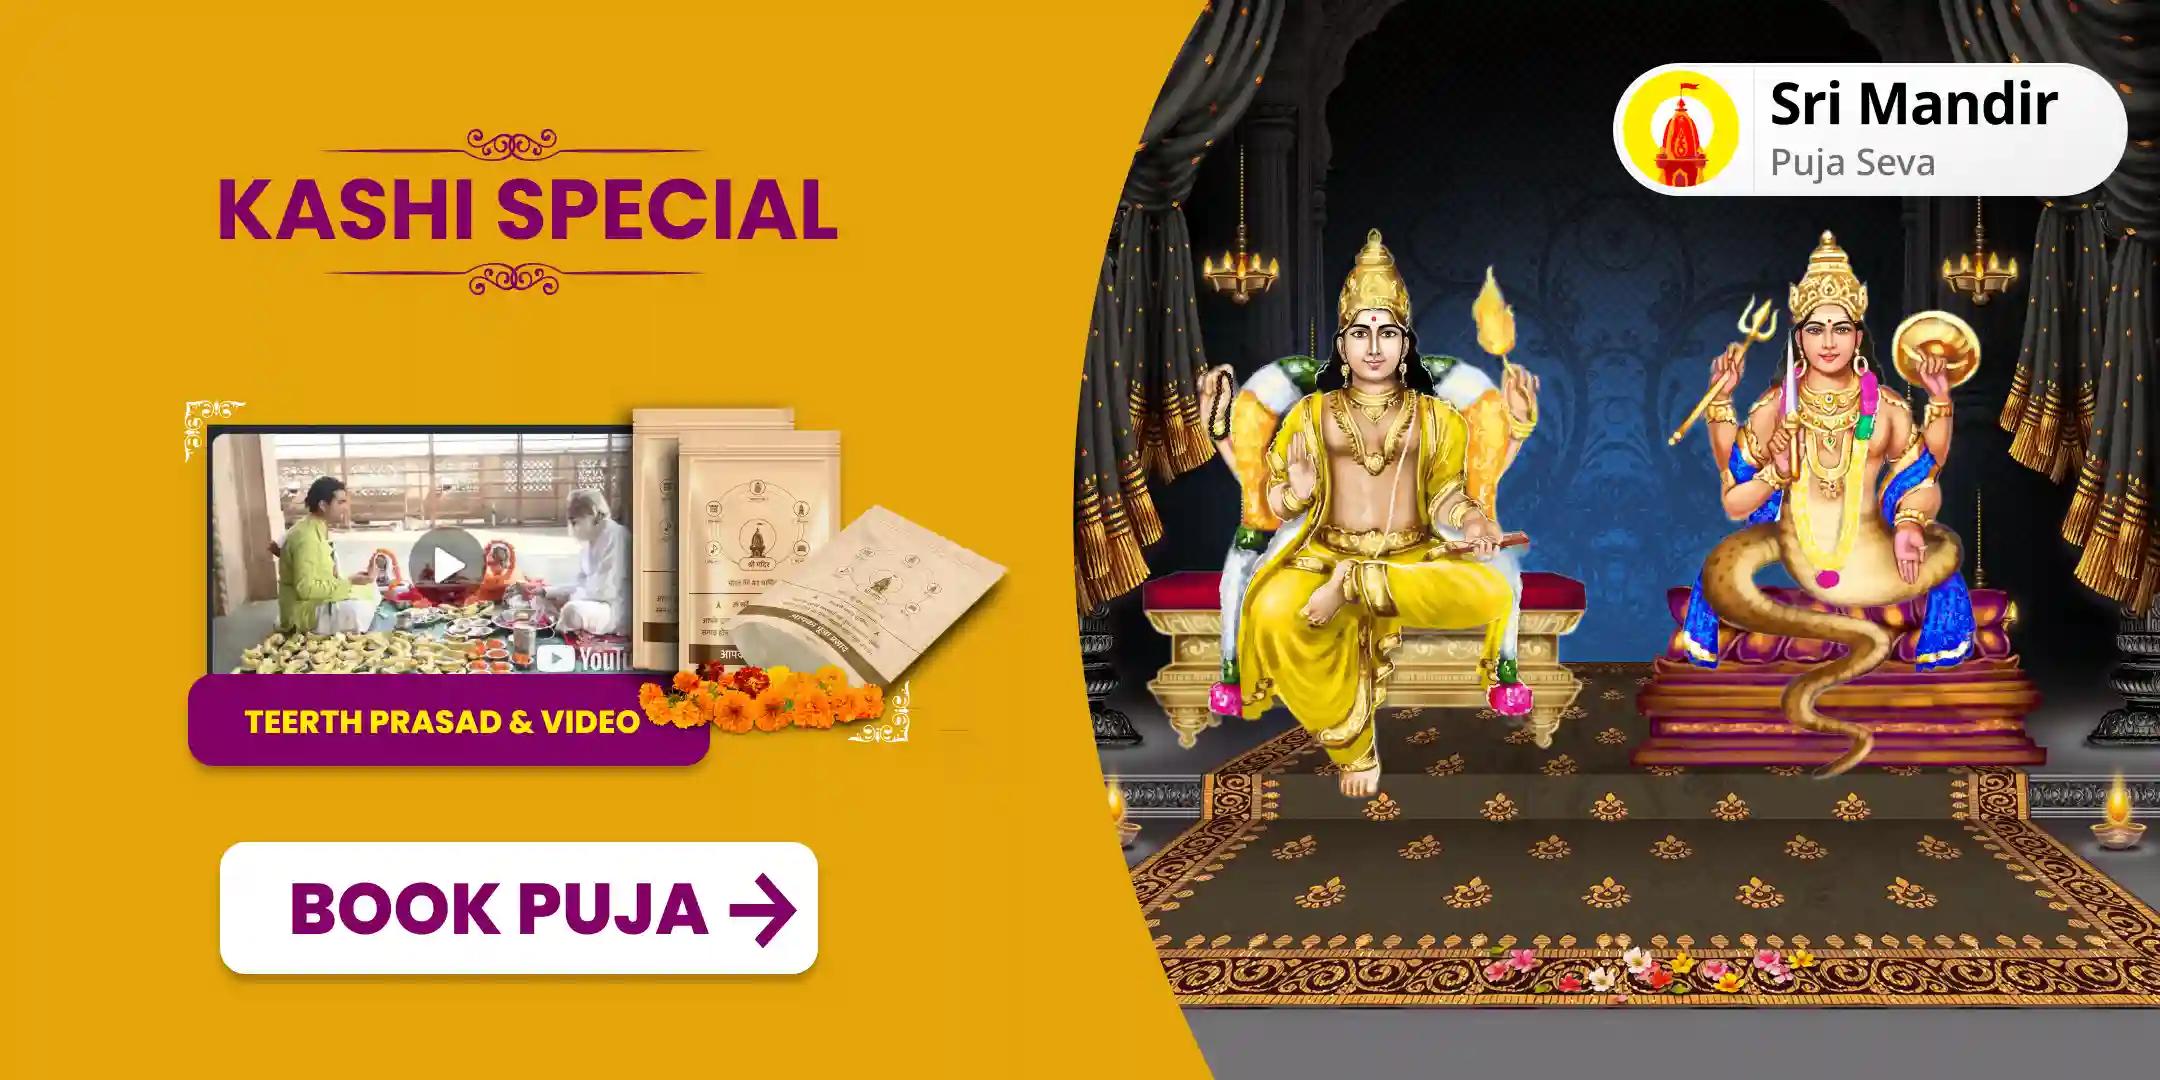 Kashi Special Rahu-Guru Shanti Special Chandal Dosha Nivaran Mahapuja for Prosperity and Material Well-Being